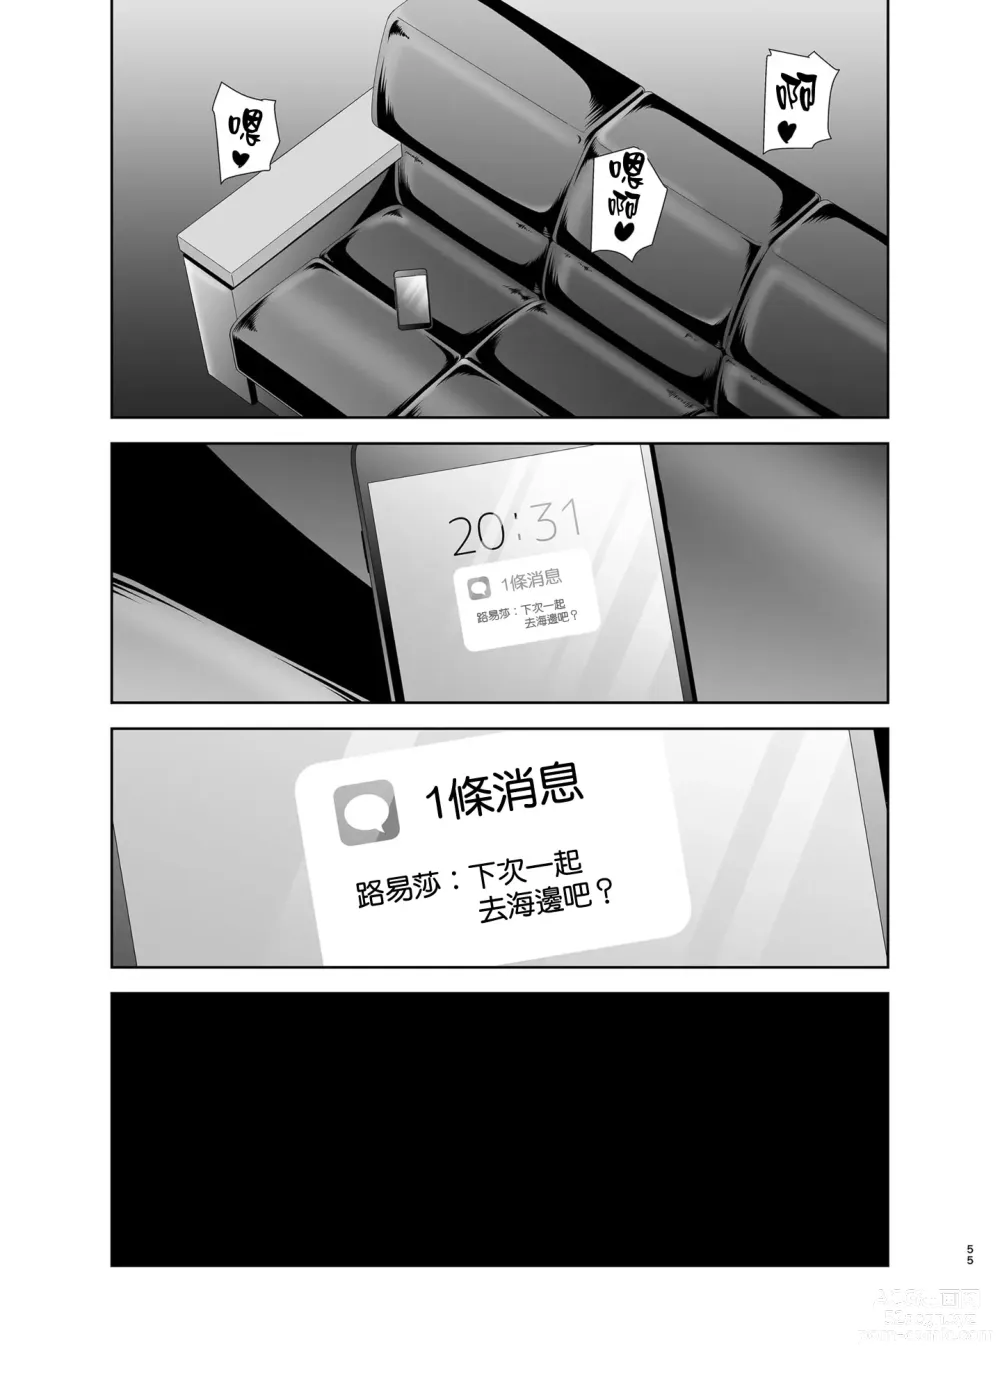 Page 54 of manga 聖華女学院高等部公認竿おじさん 5